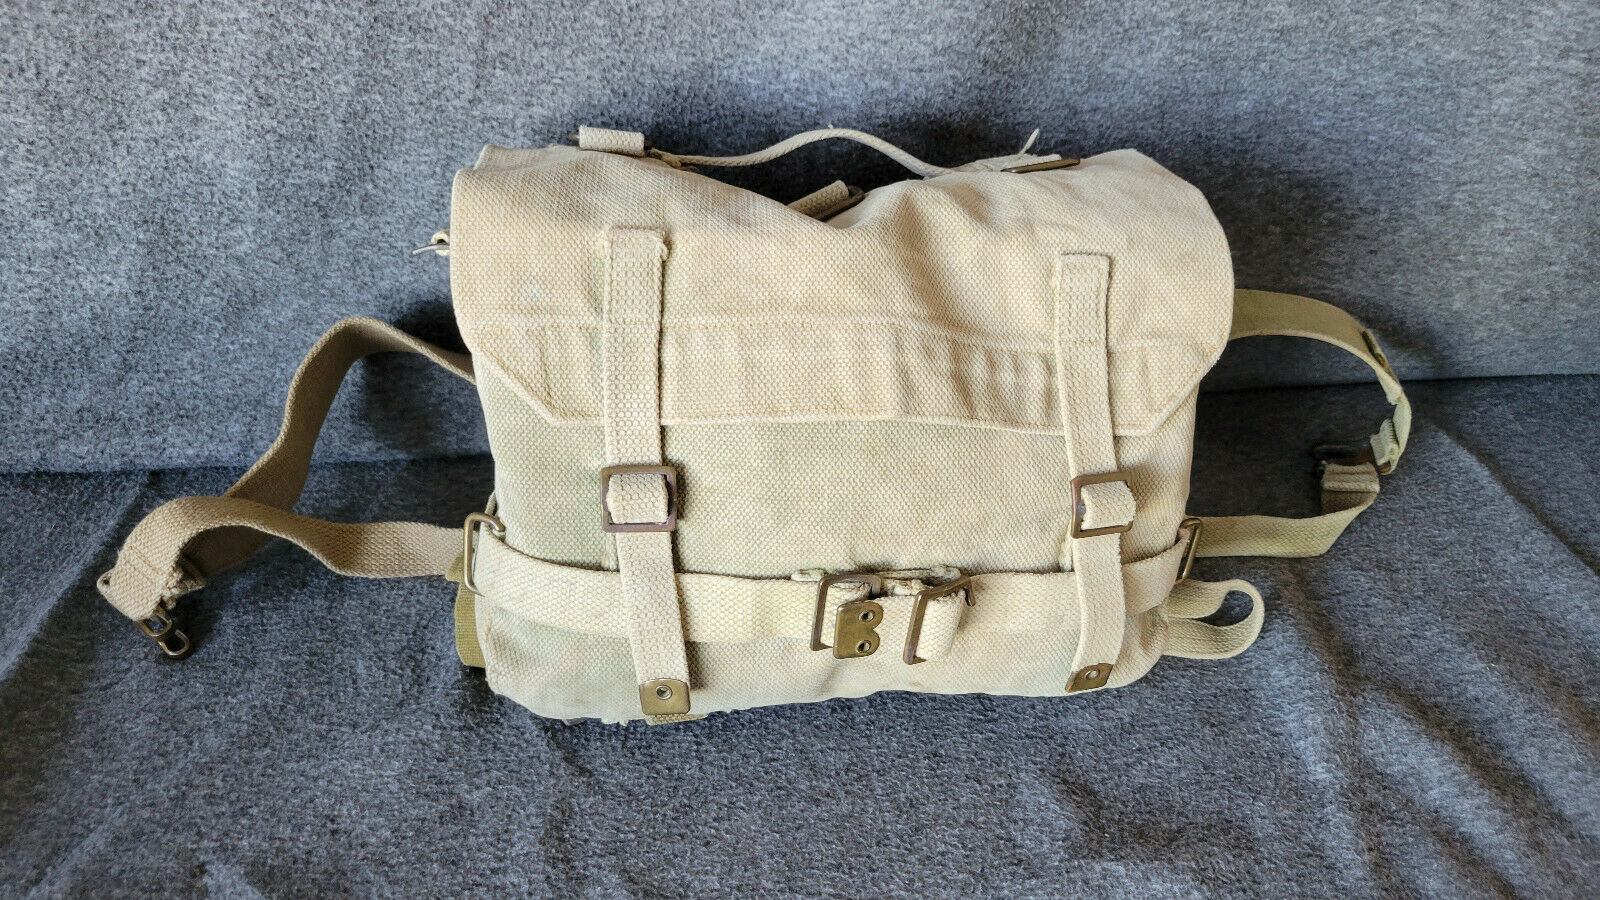 Pattern 37 Haversack Backpack,Congo Crisis Era Mercenary Gear